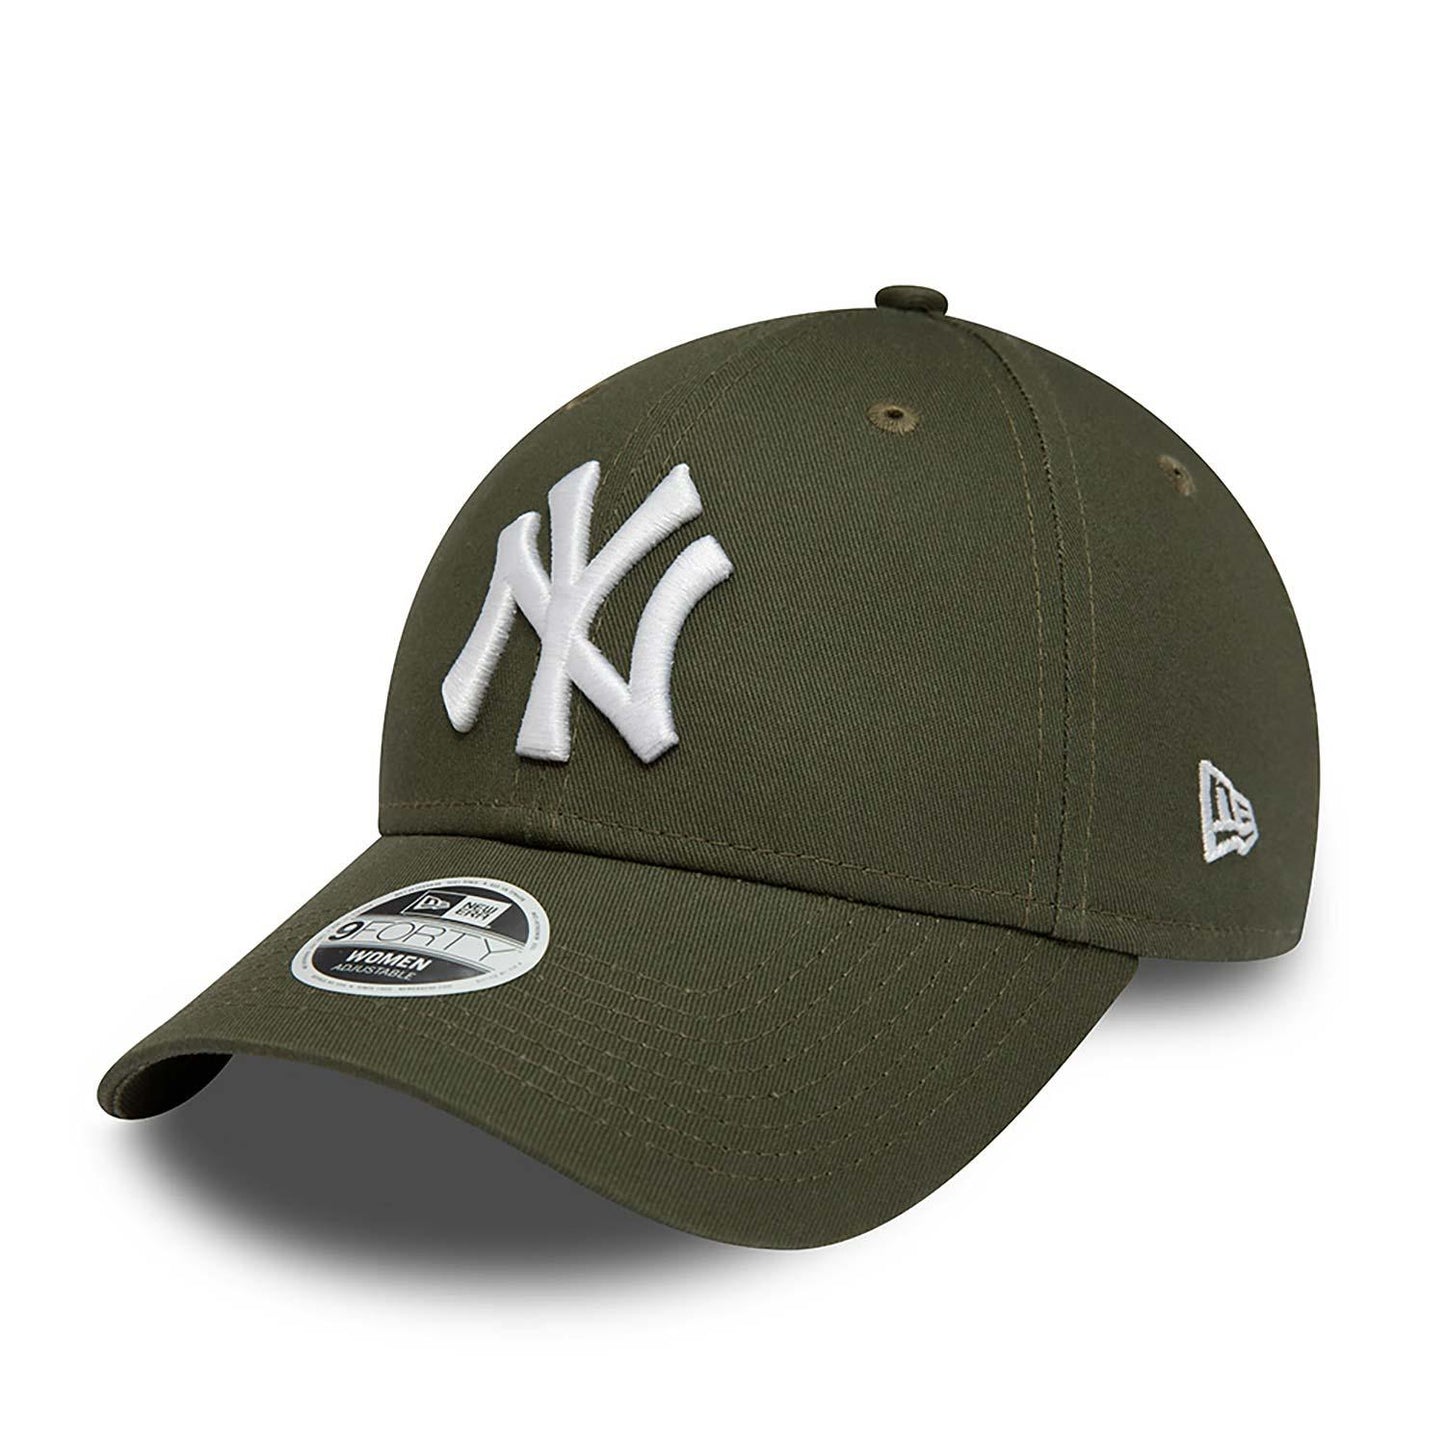 New Era Women's New York Yankees 9FORTY Jade Green Hat